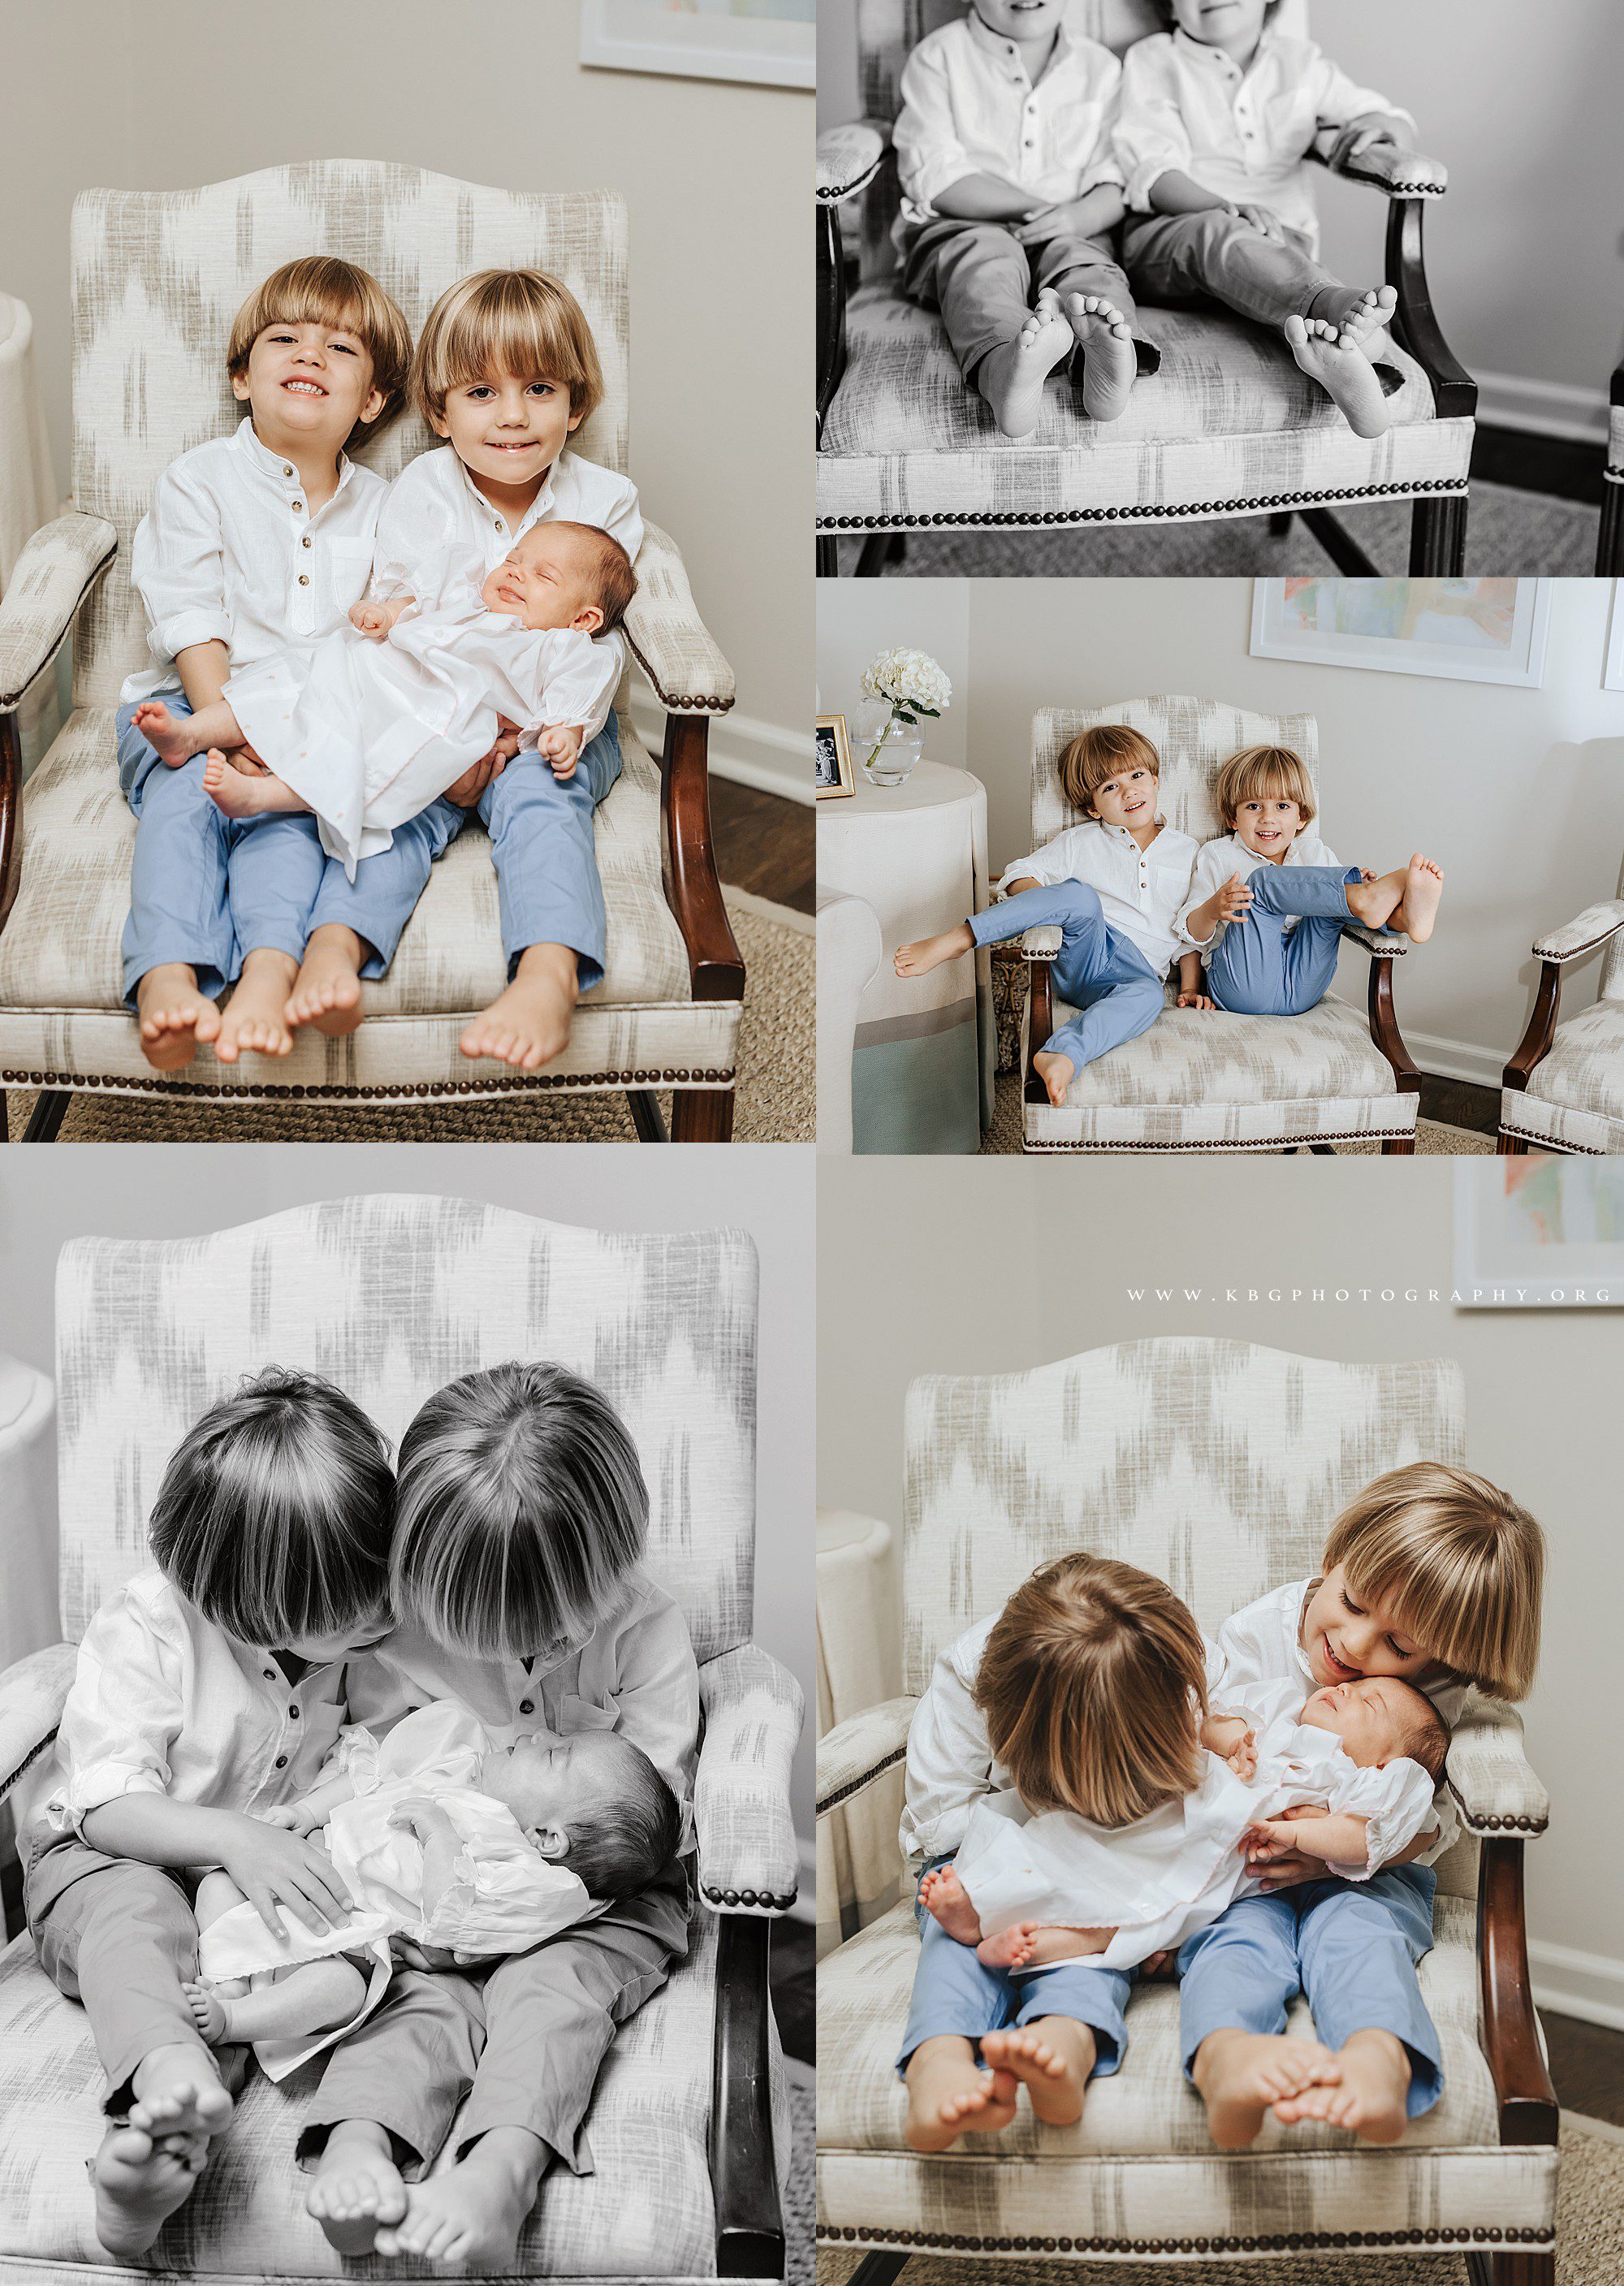 chamblee georgia newborn photographer - twin big brothers with baby sister